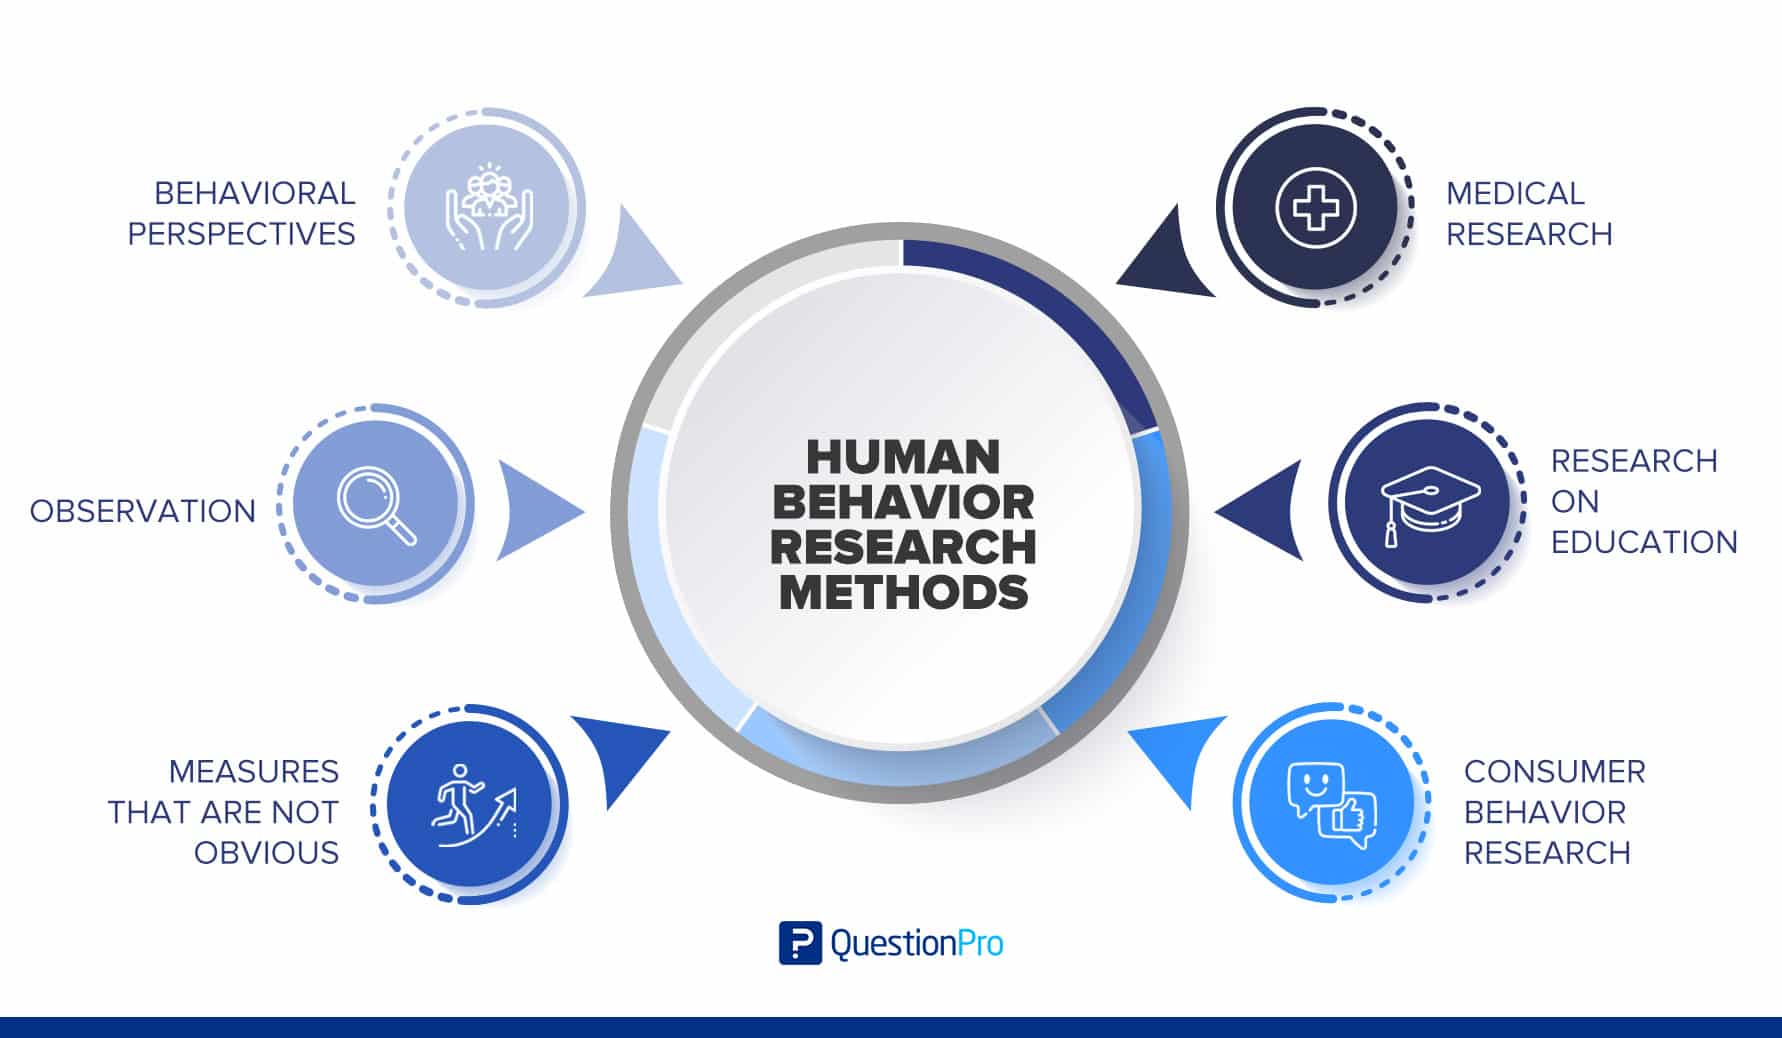 research topics in behavioral science